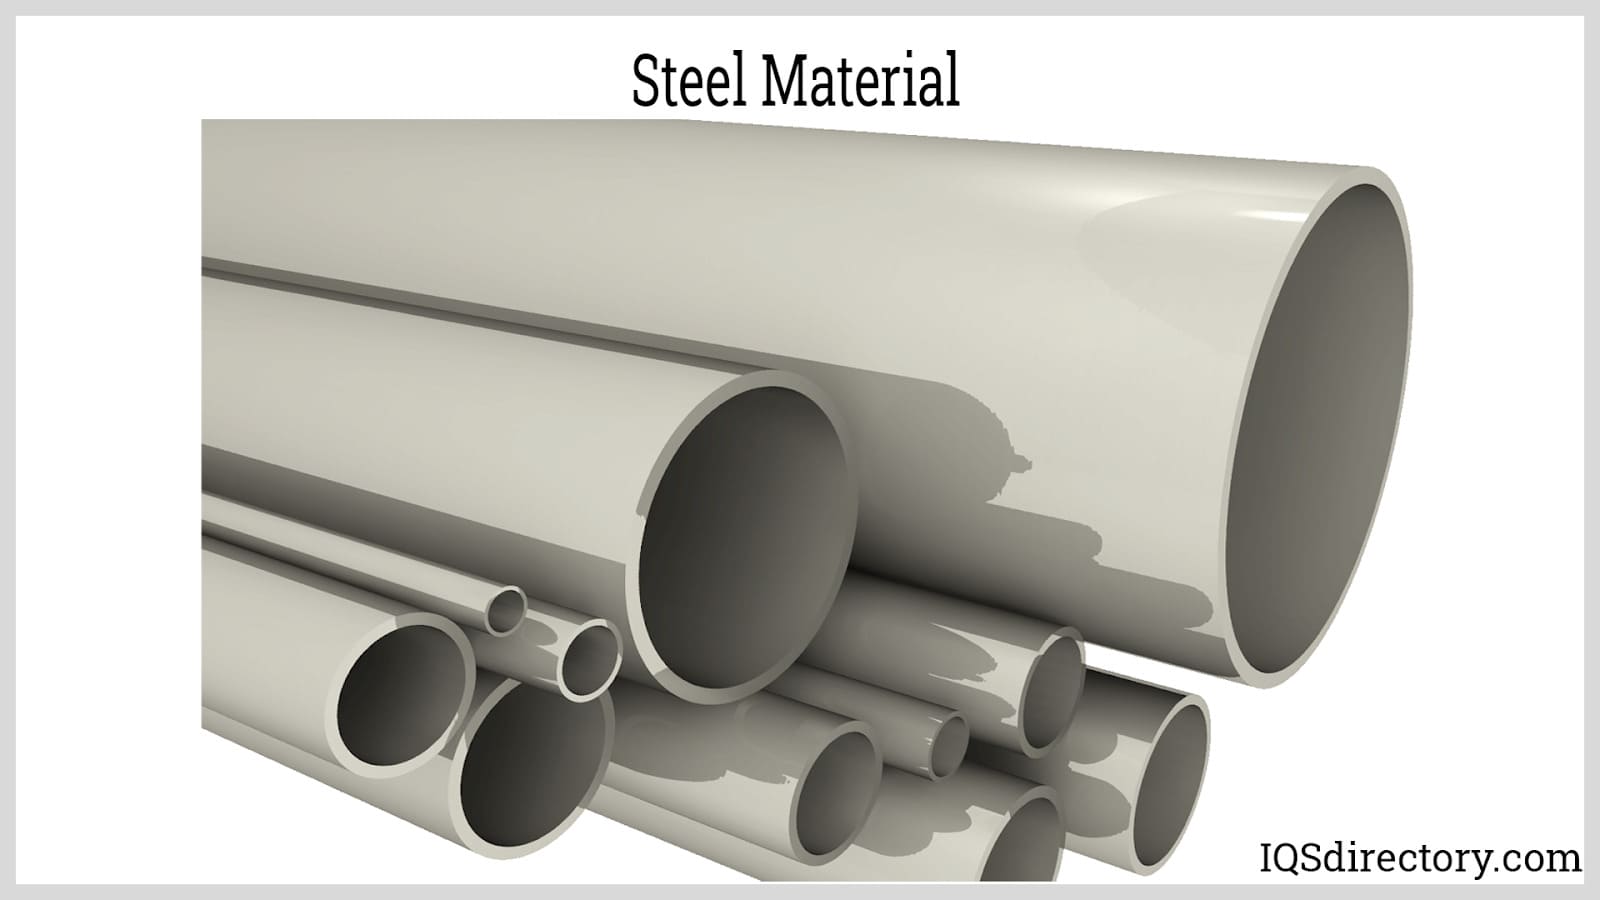 Steel Material